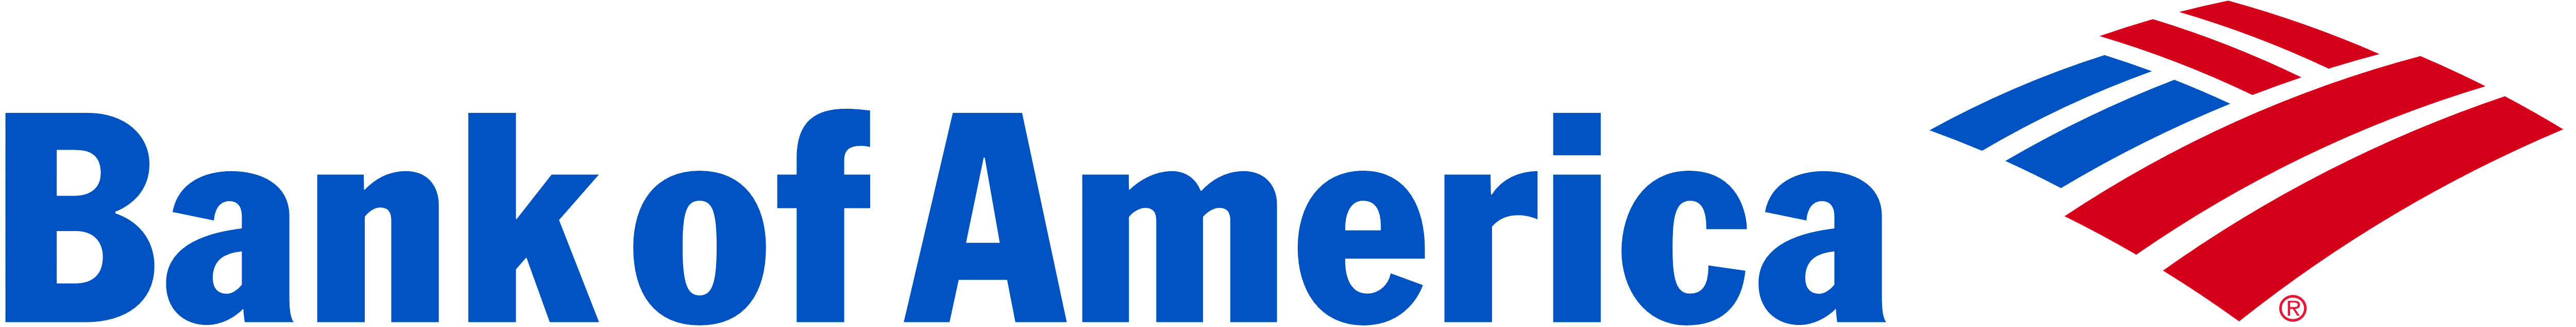 bank of america brand png logo #4537